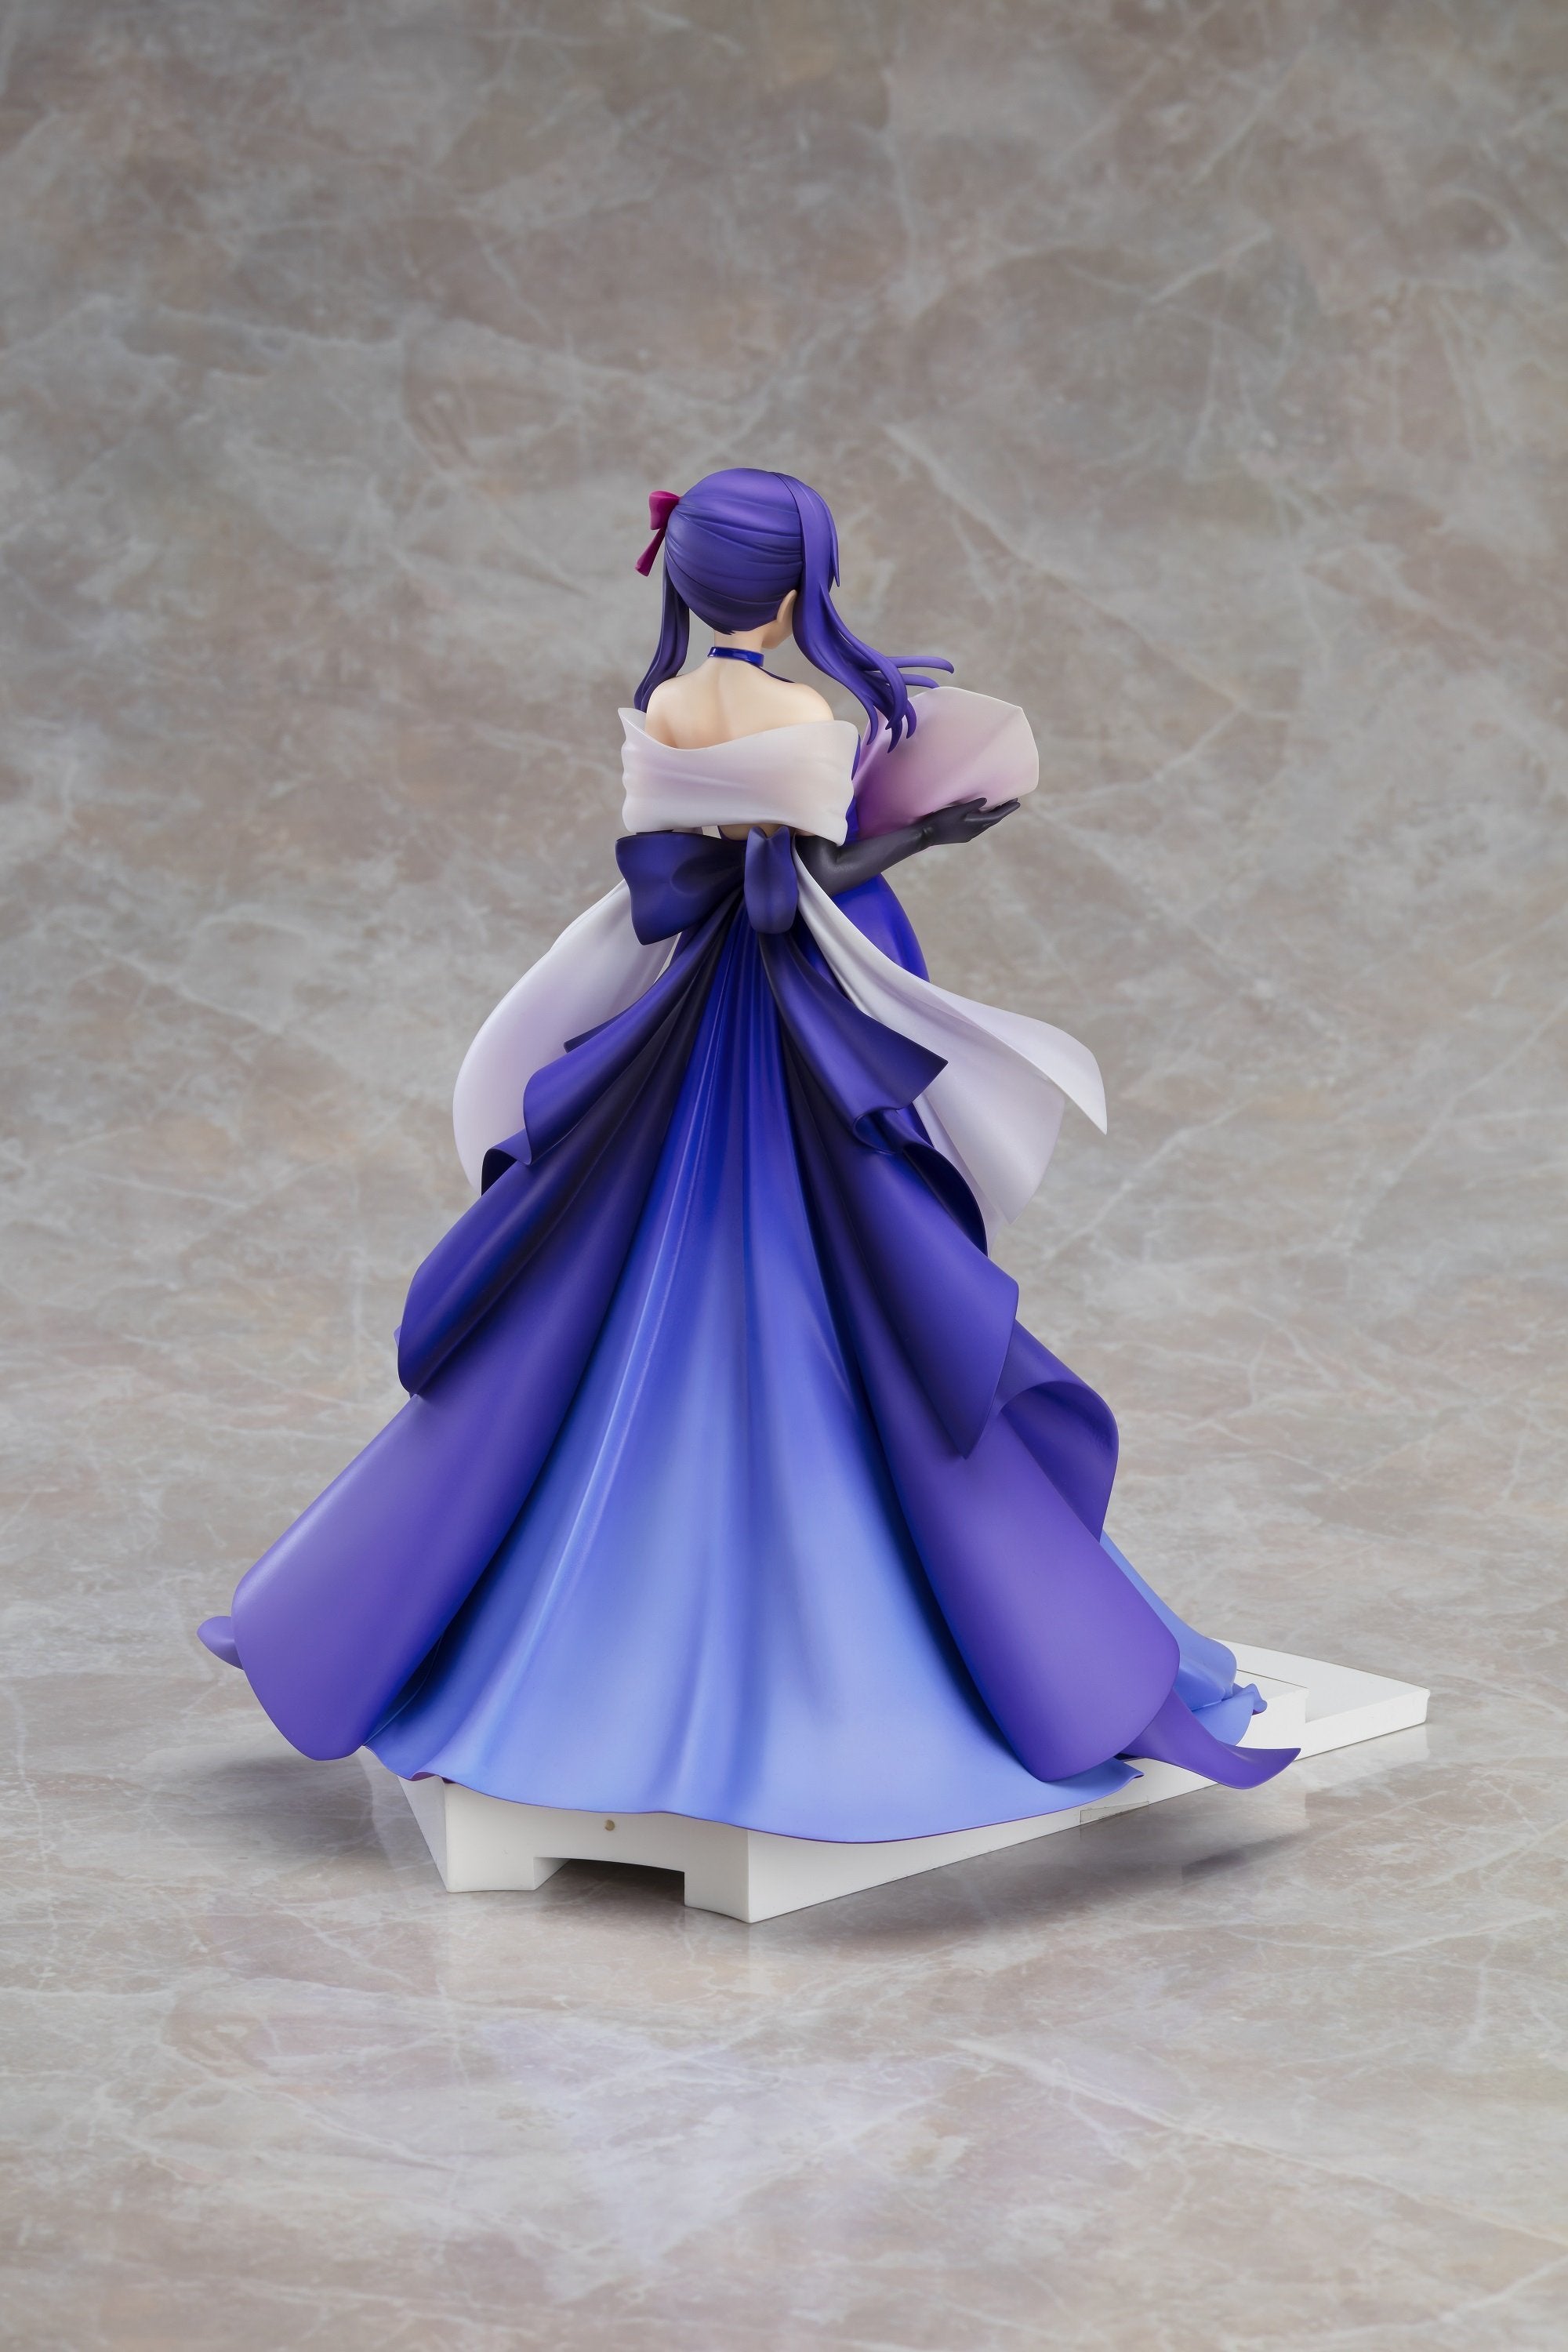 Fate/Stay Night - Sakura Matou 1/7 Scale Figure (15th Celebration Dress Ver.) image count 2